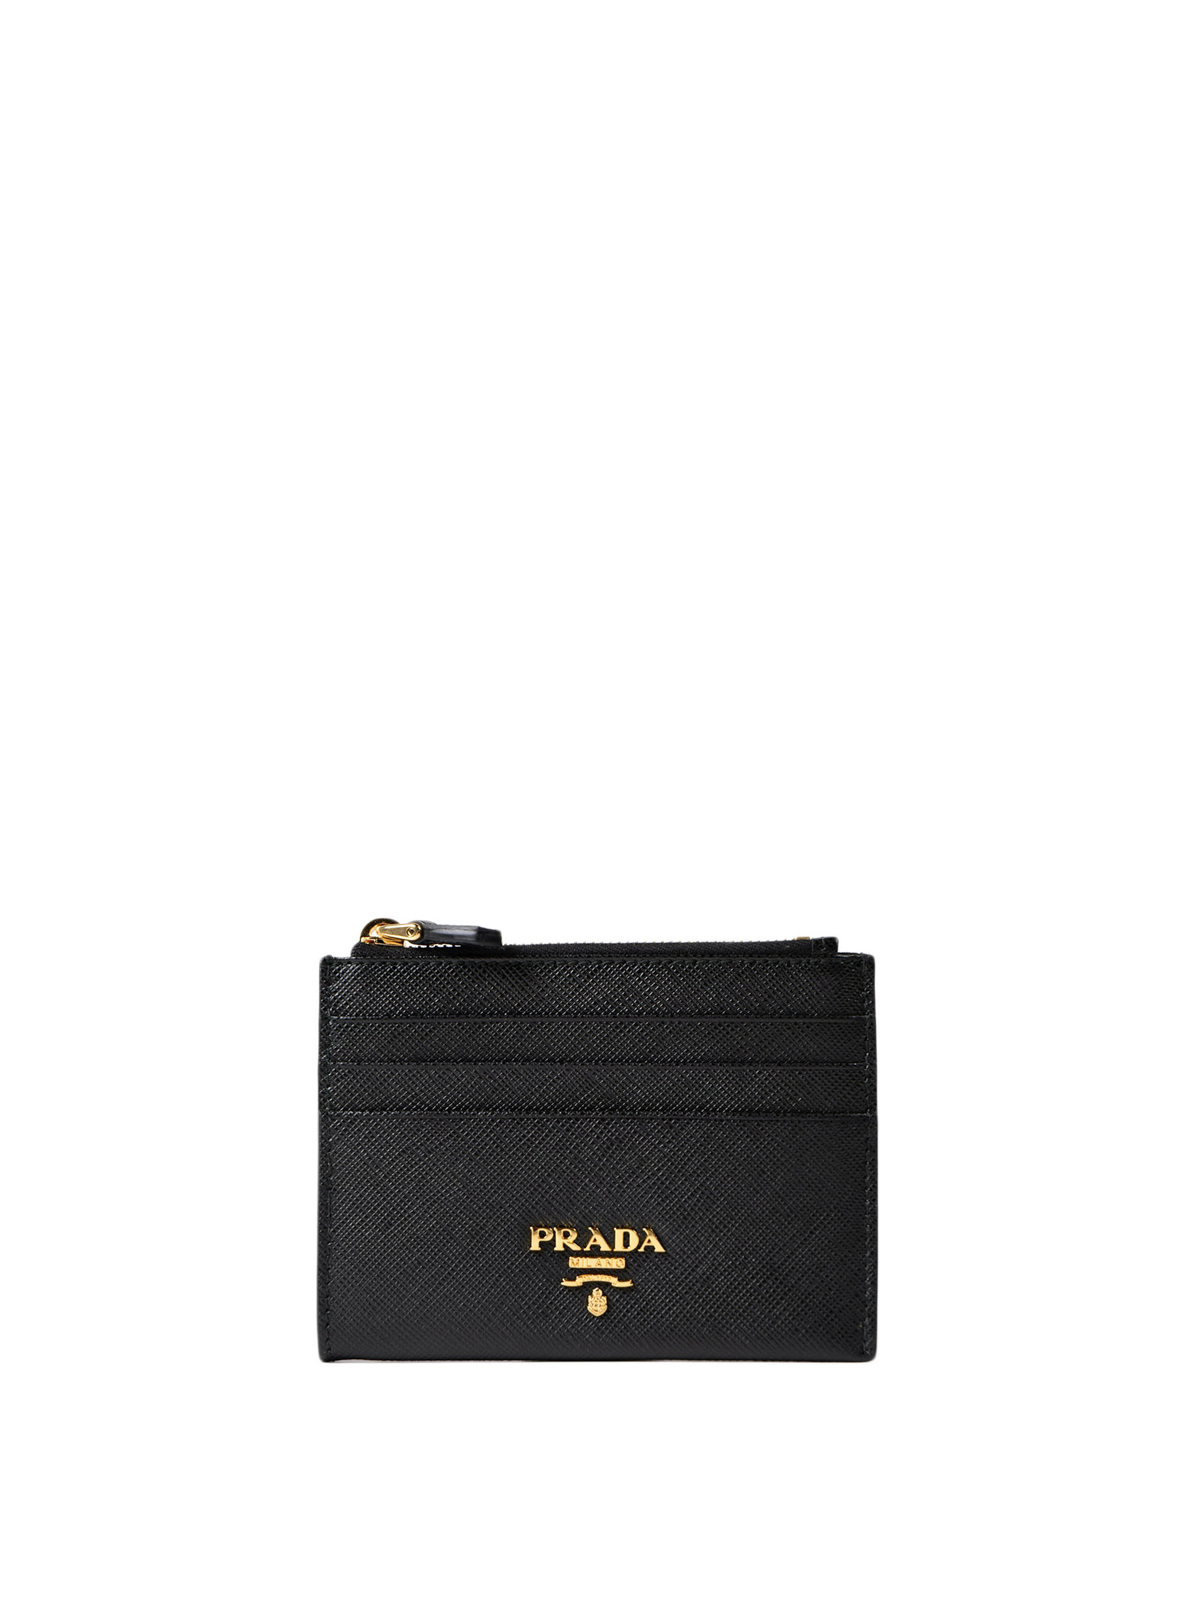 Prada Saffiano Leather Card Case In Black